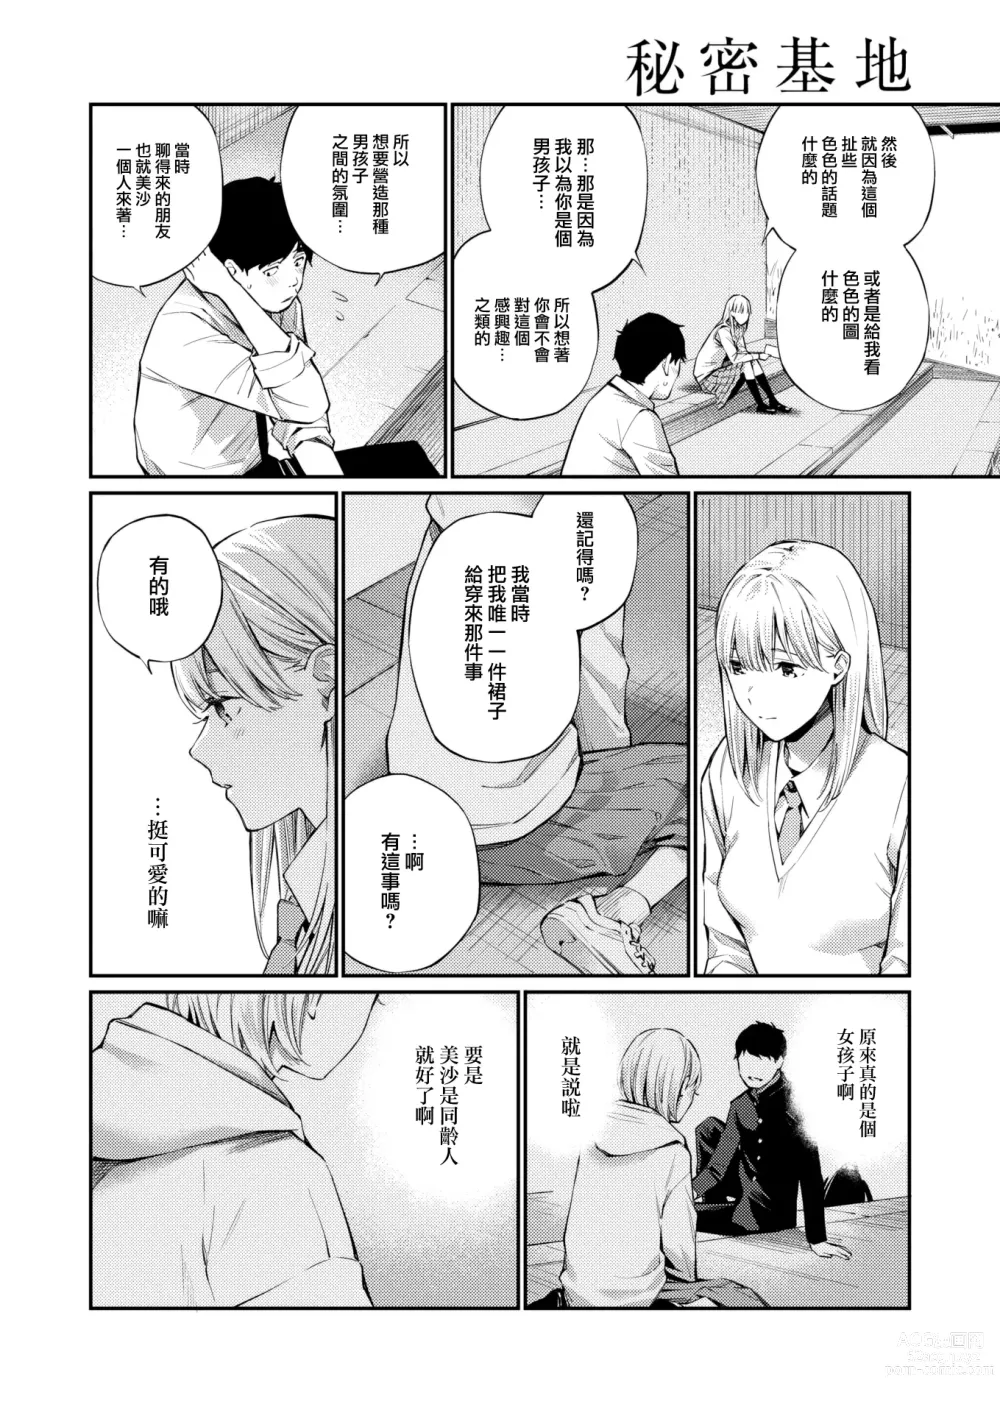 Page 7 of manga Himitsu Kichi